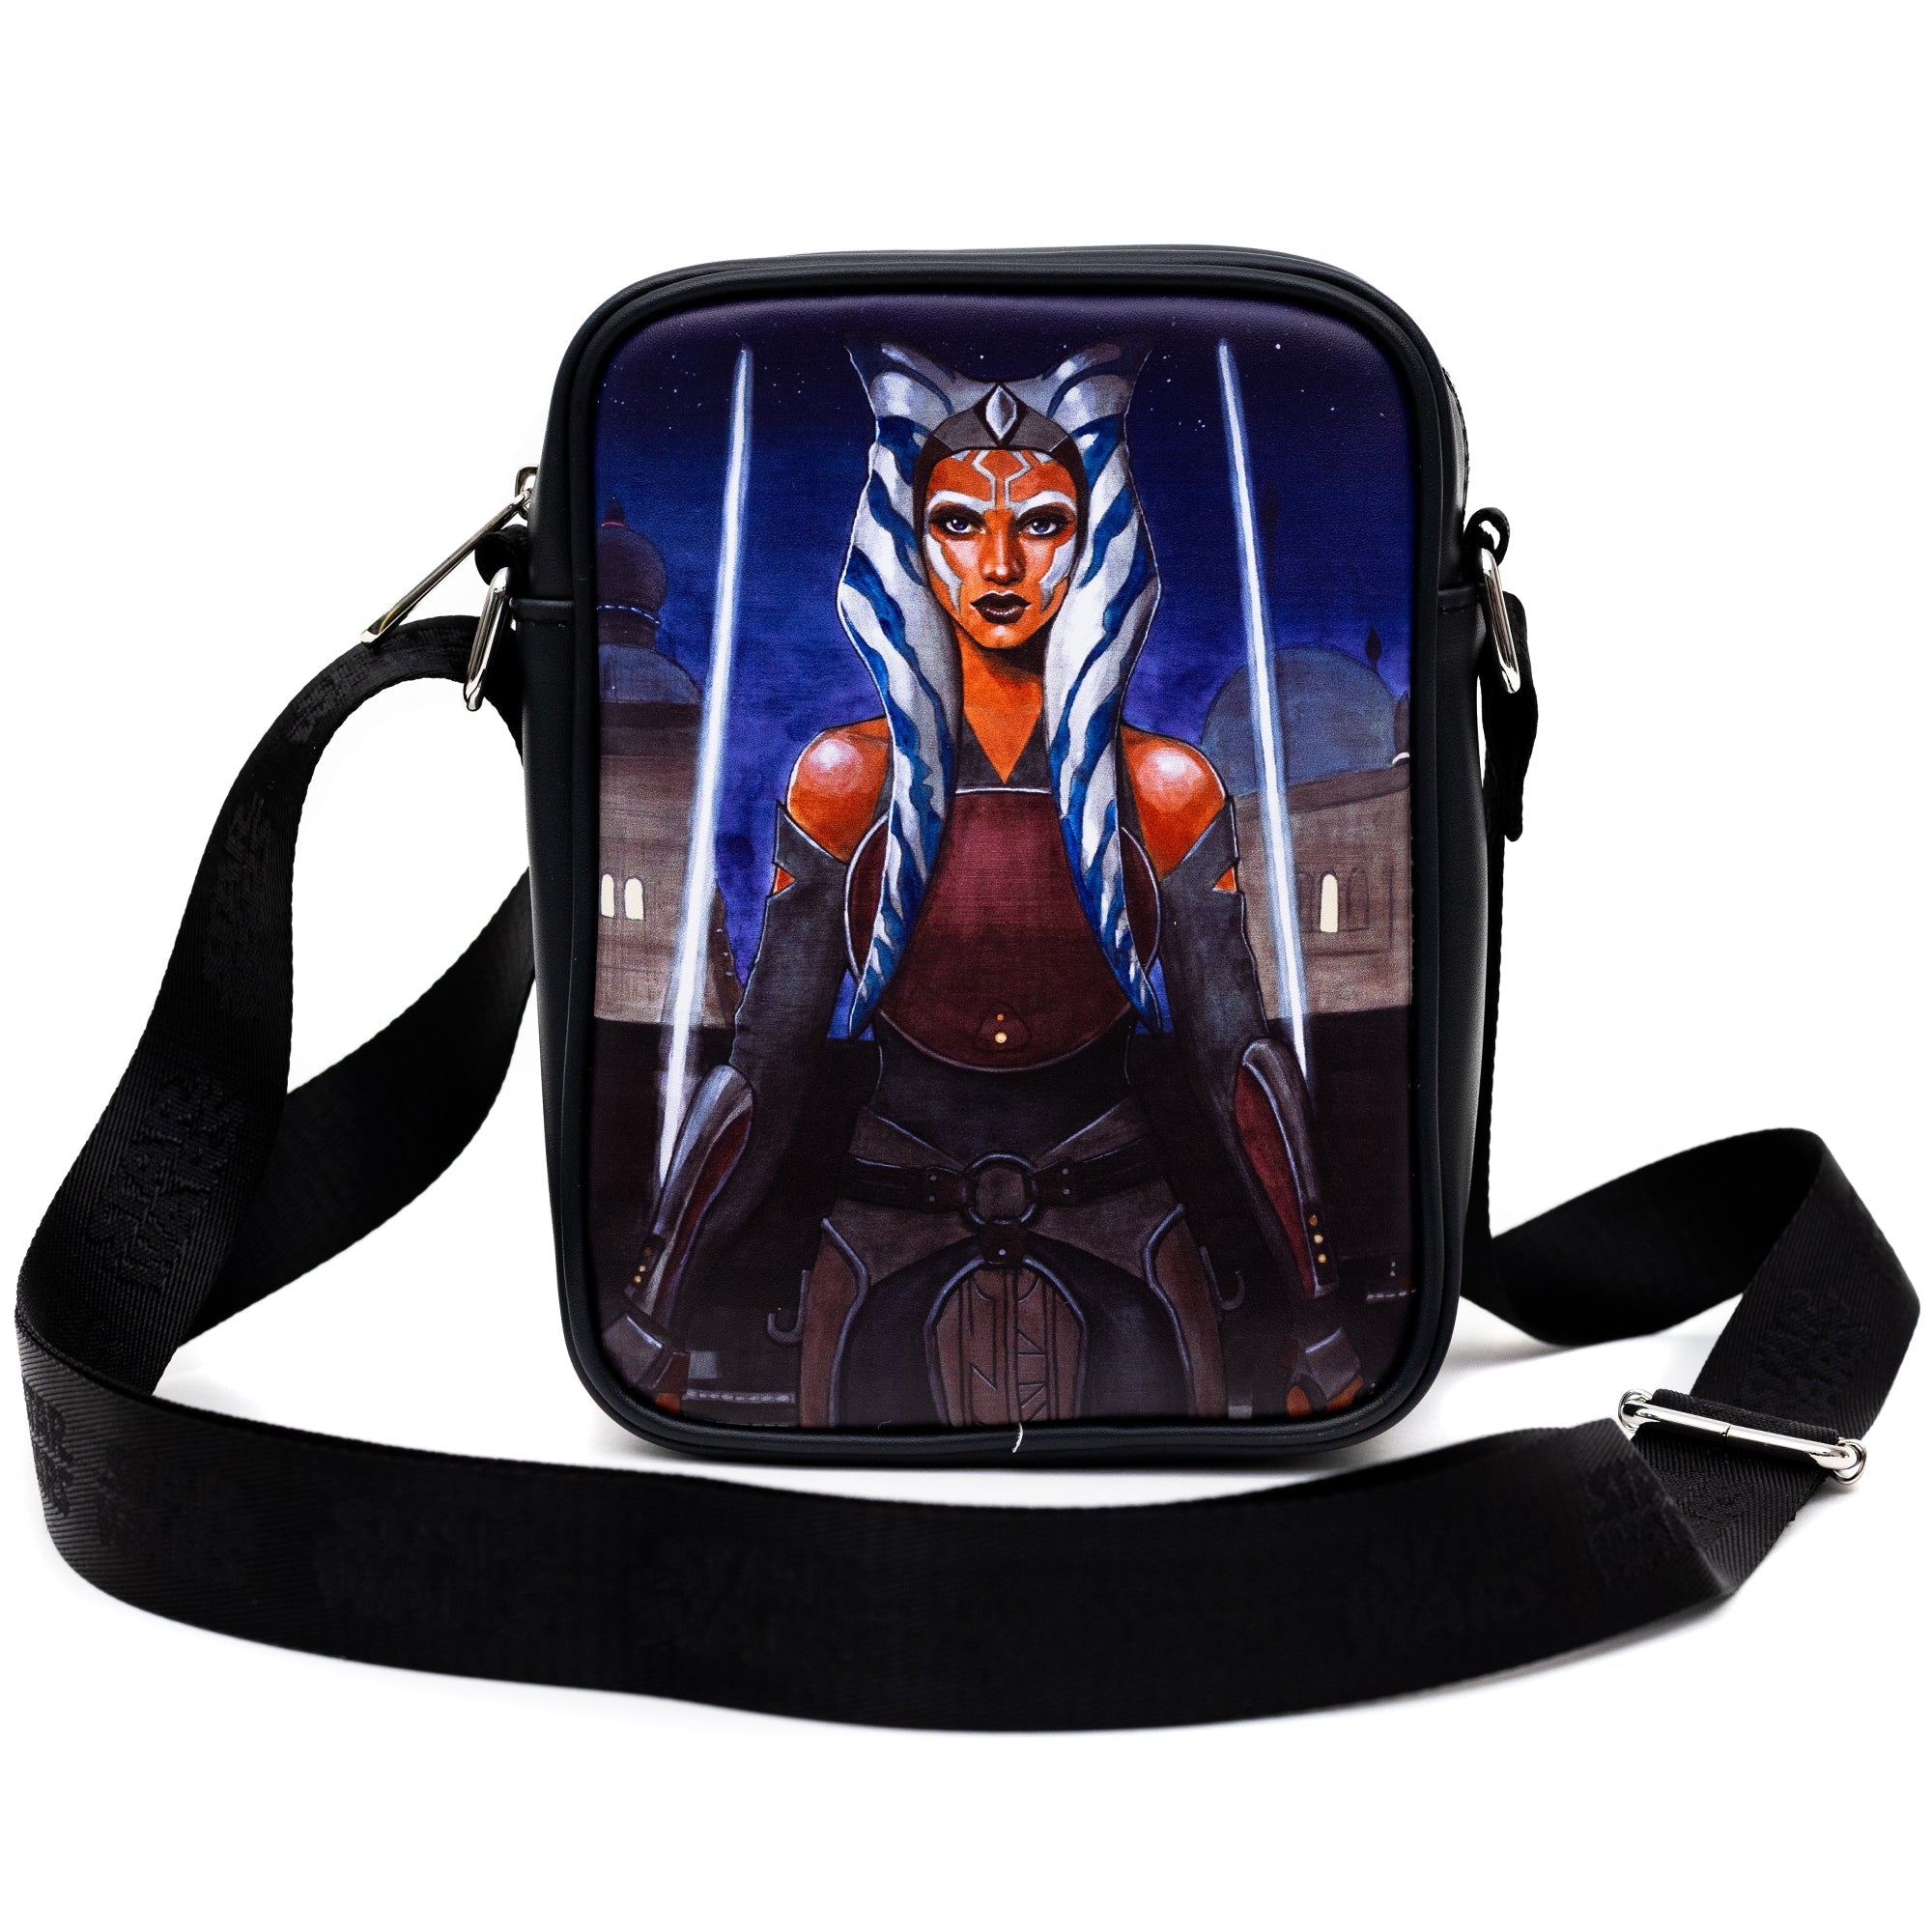 Star Wars Ahsoka Tano Pose Crossbody Bag and Wallet Combo